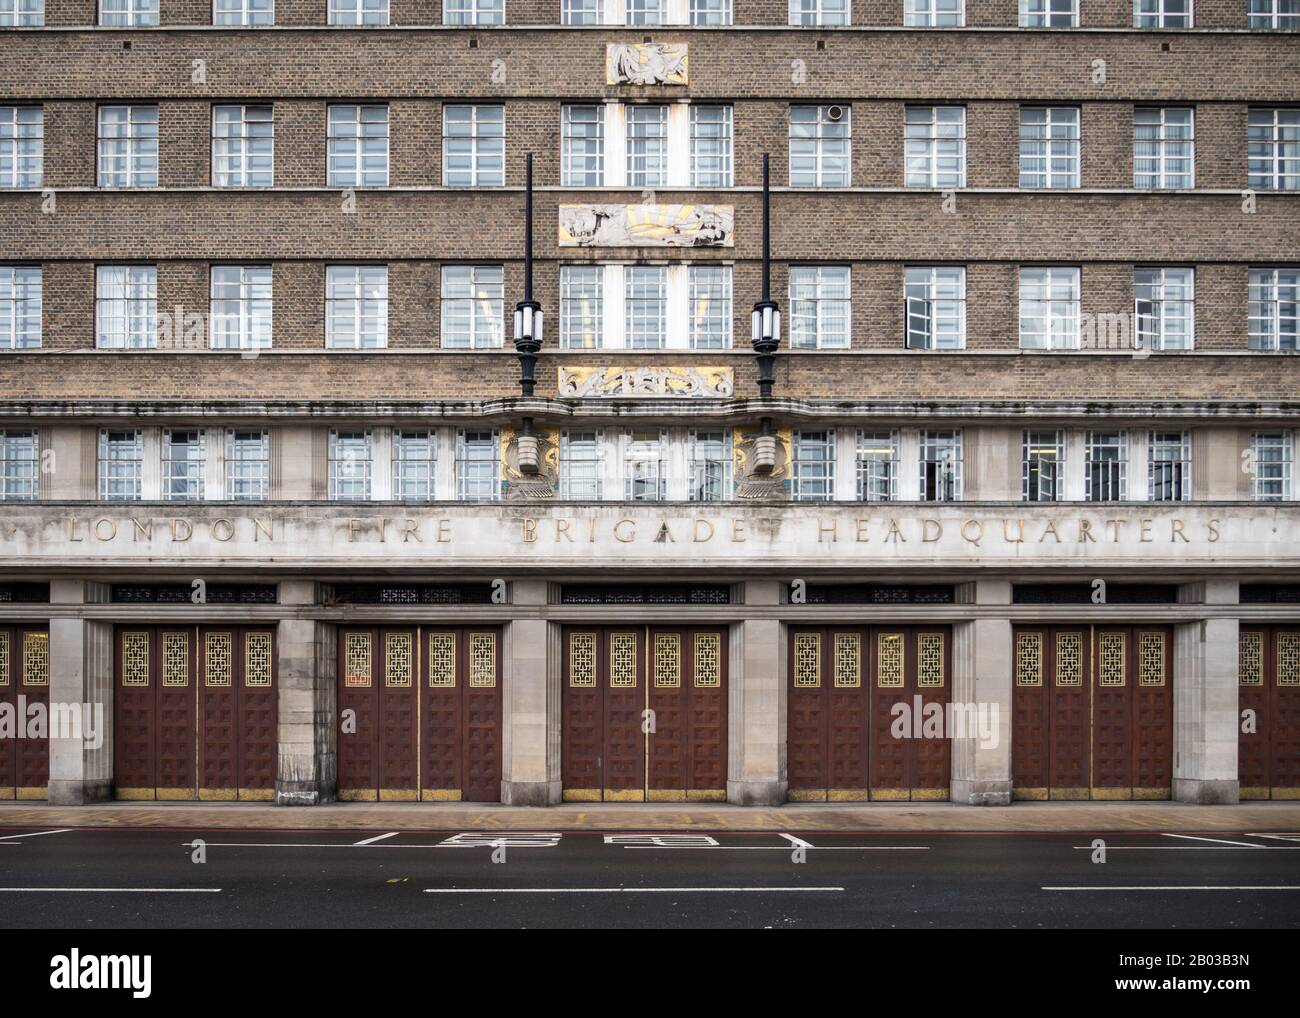 London Fire Brigade Headquarters. The art deco architectural facade to the London Fire Bridge HQ on Albert Embankment, London, UK. Stock Photo